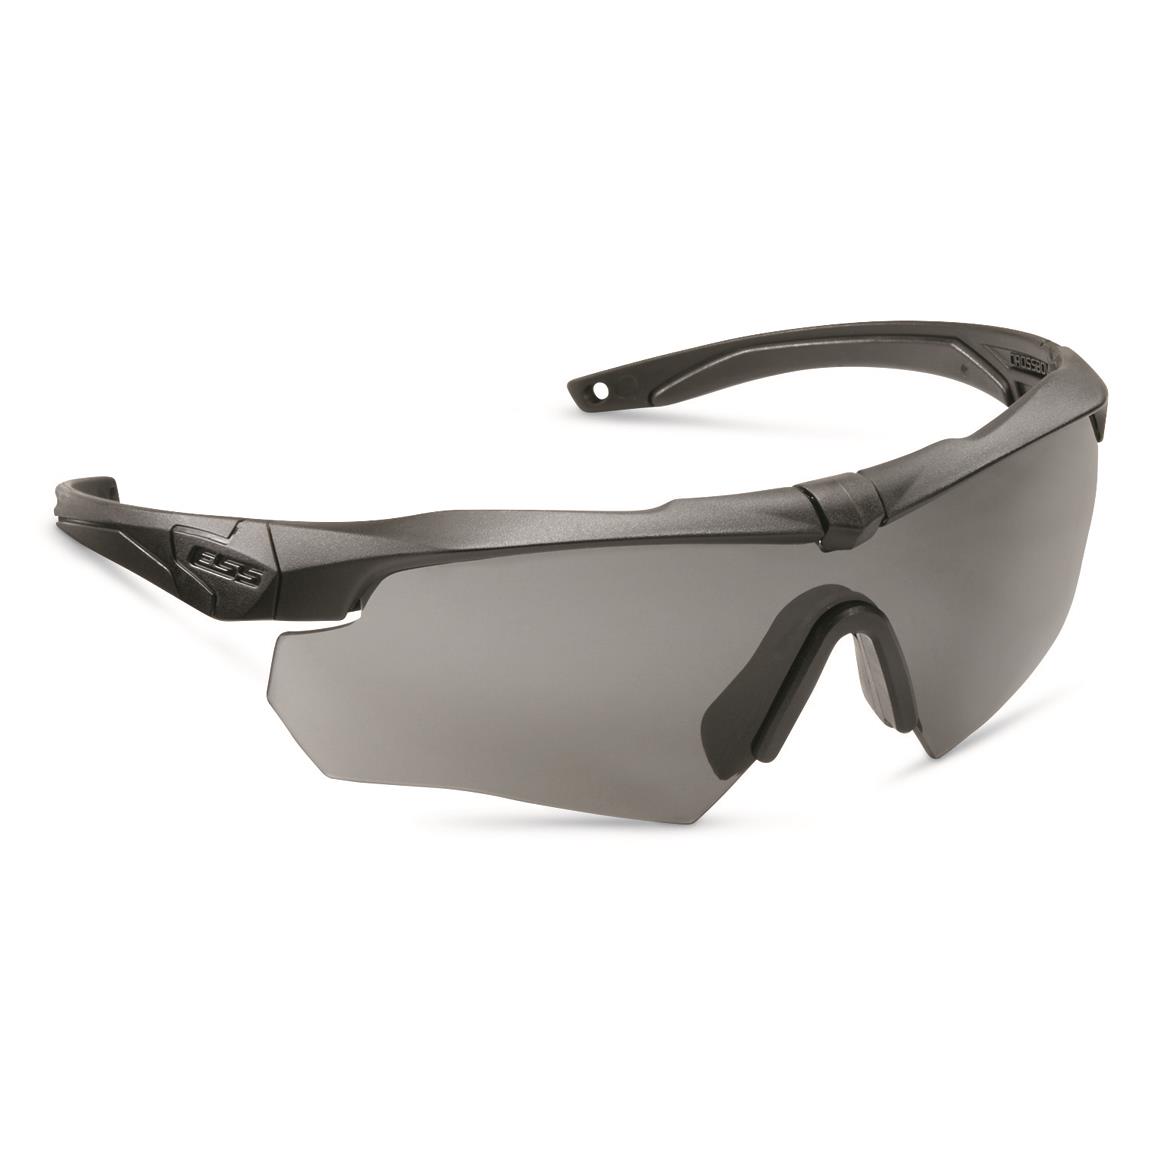 Usmc Military Surplus Ess Crossbow Ballistic Glasses New 711374 Military Eyewear At Sportsman